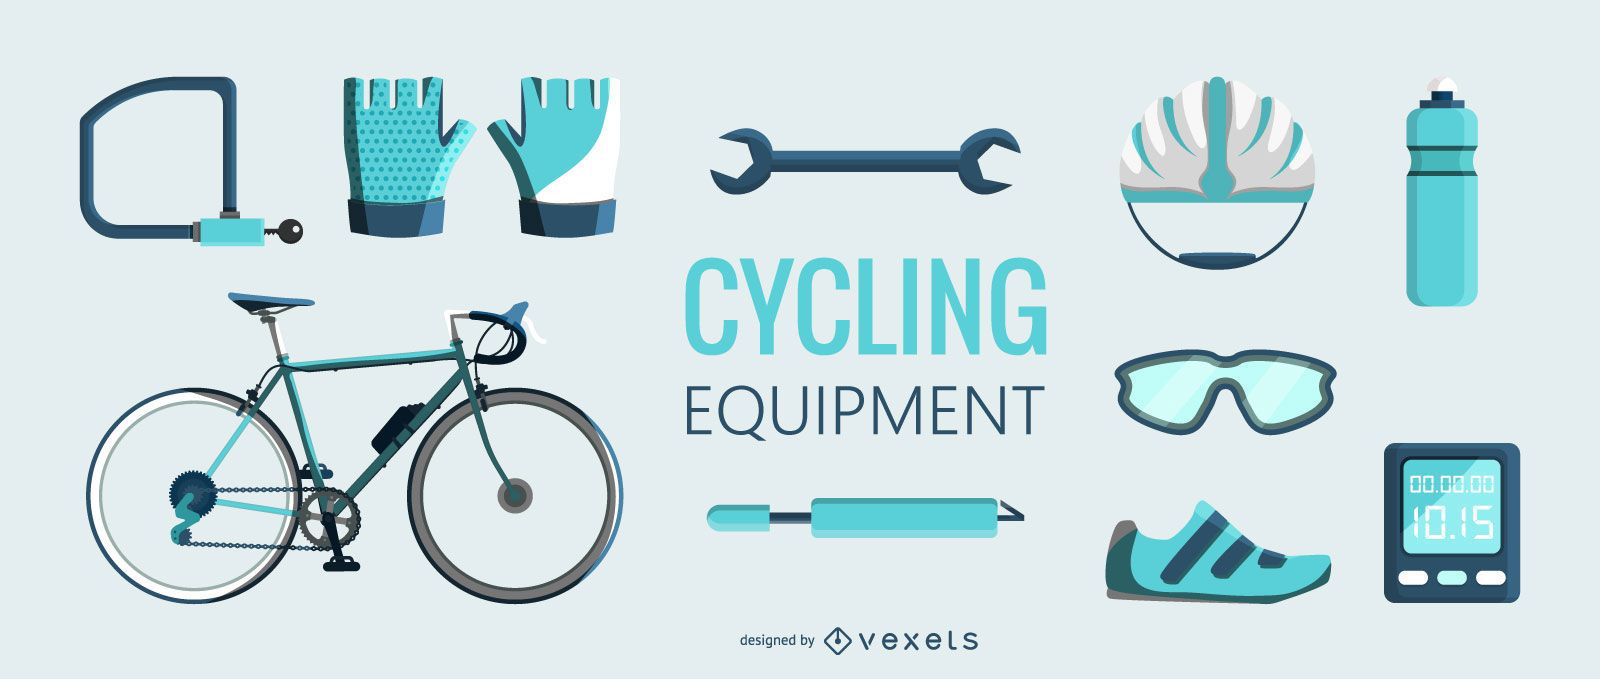 Flt cycling equipment illustration